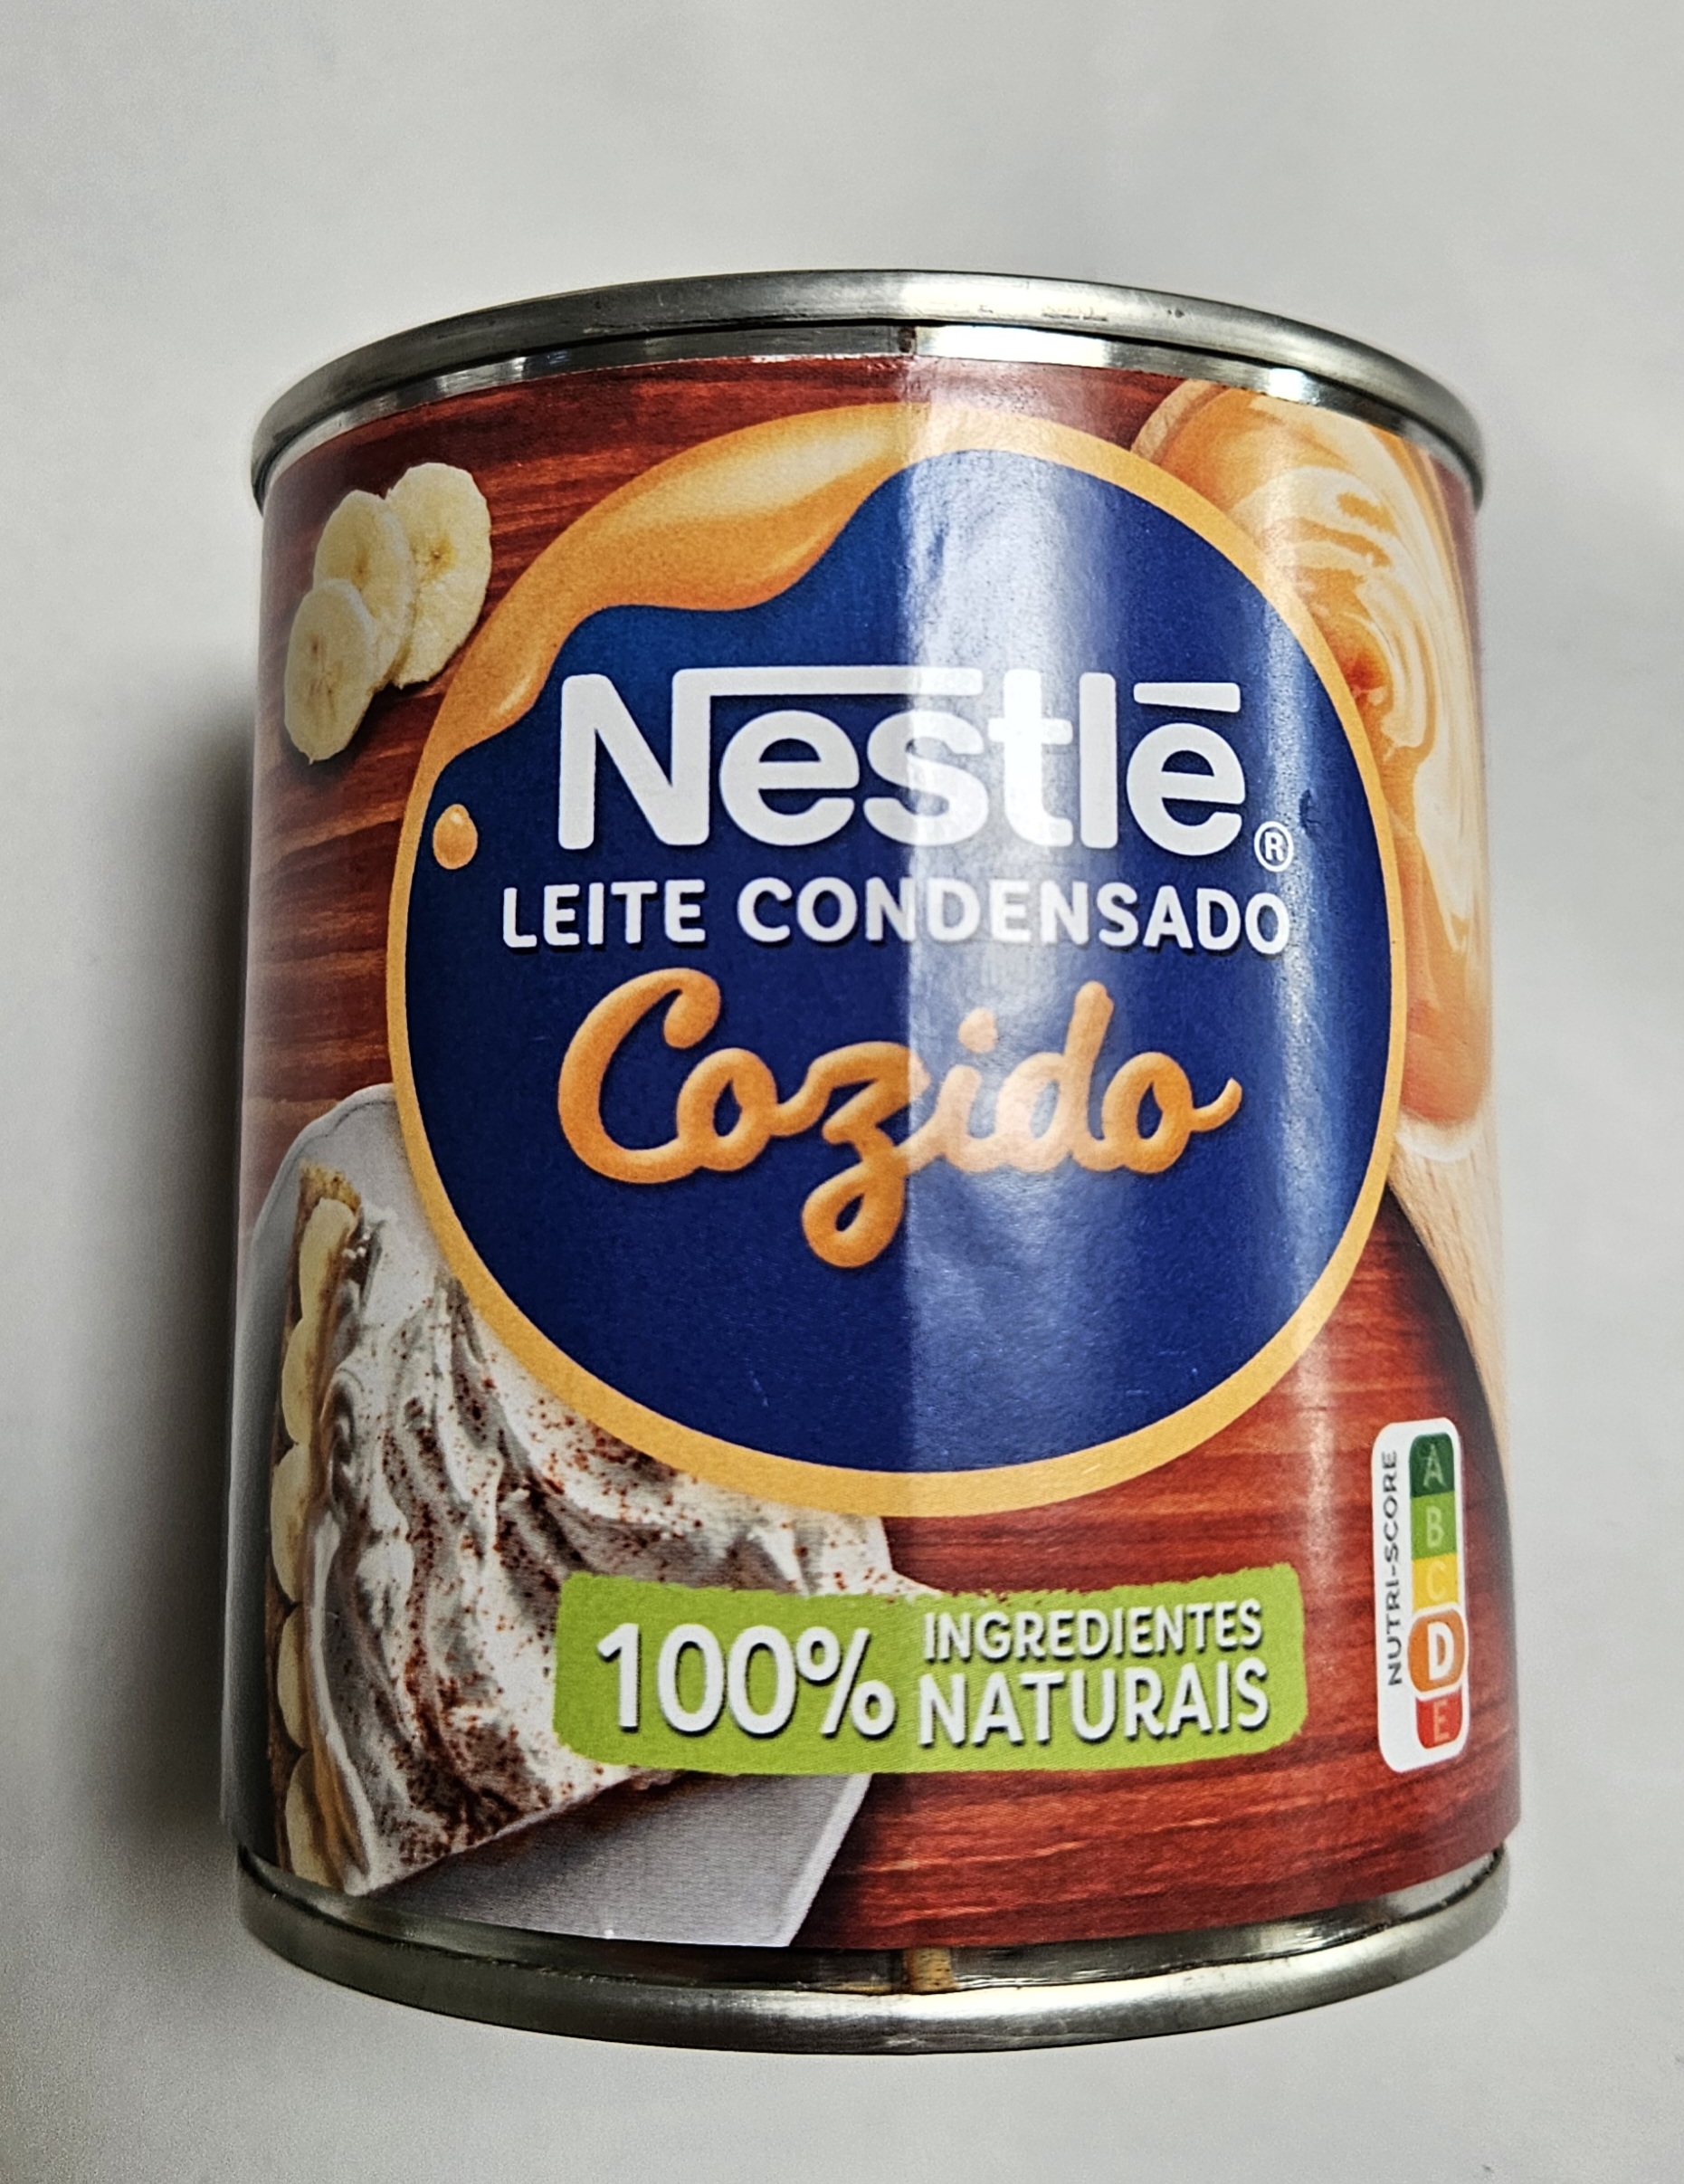 Nestlé leite condensado cozido – lait condensé pour cuisiner – 397g